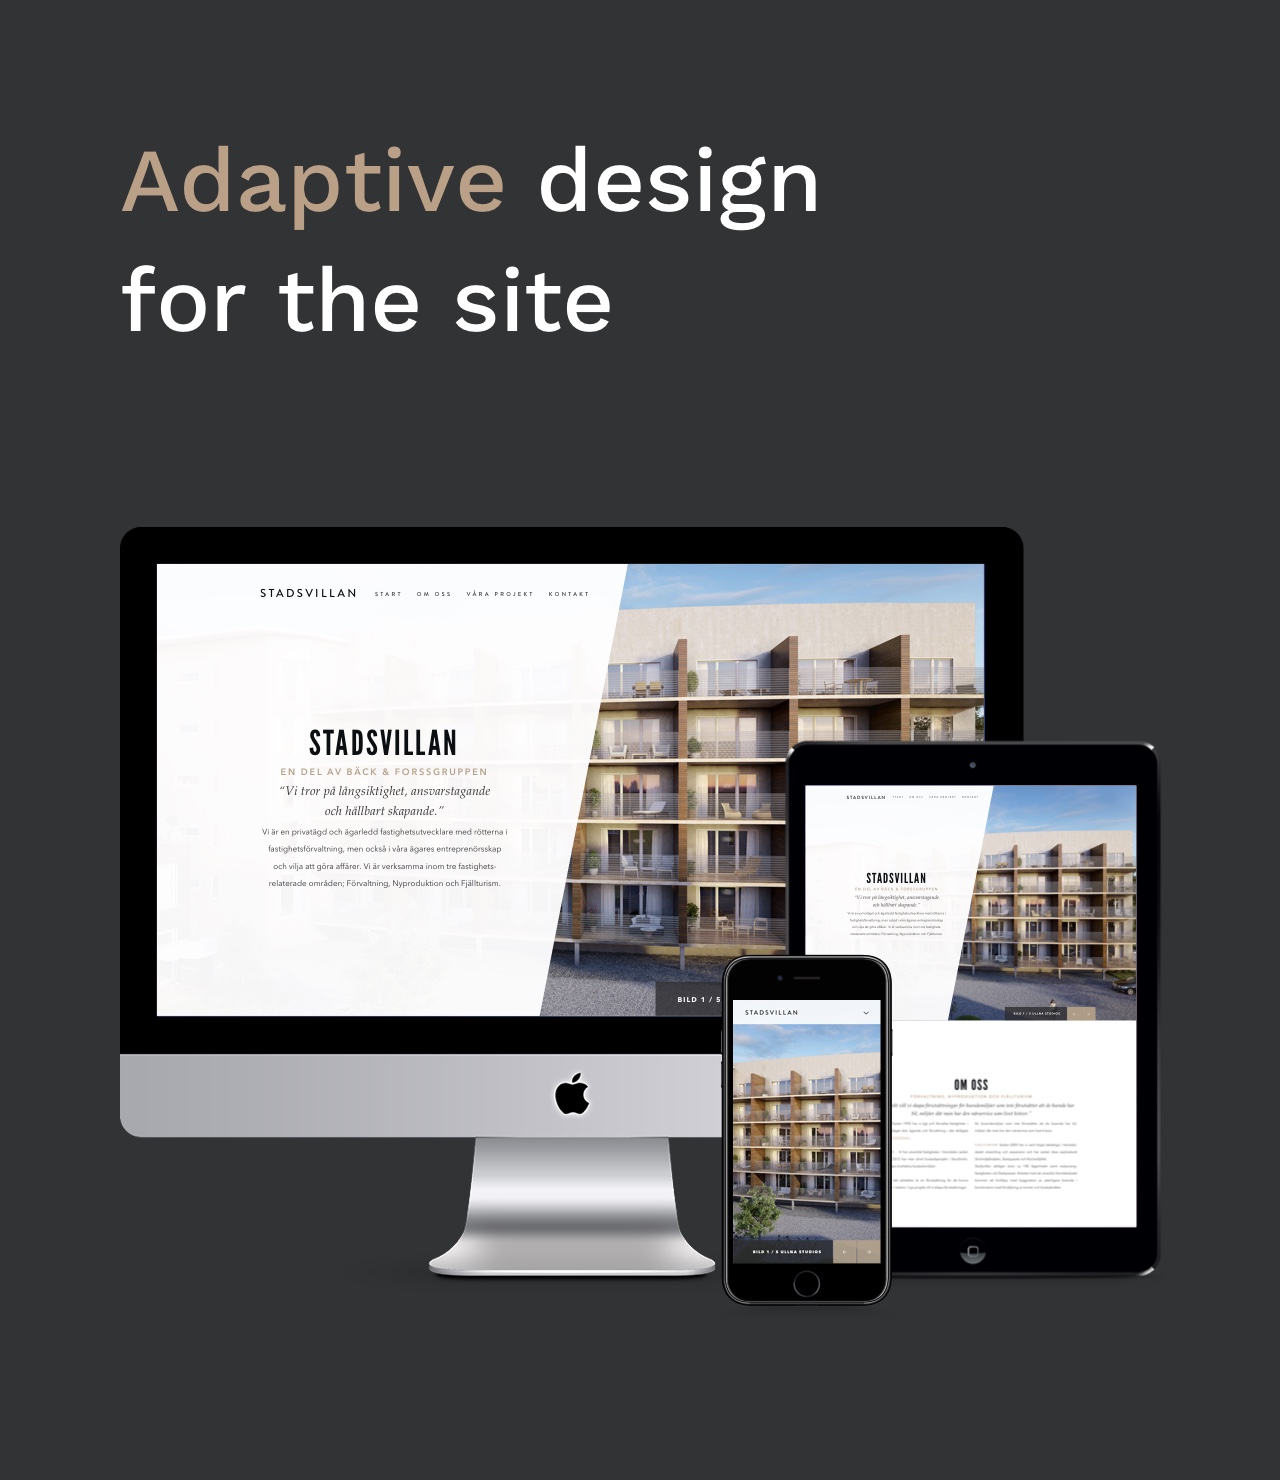 Stadsvillan devices showing adaptive web design